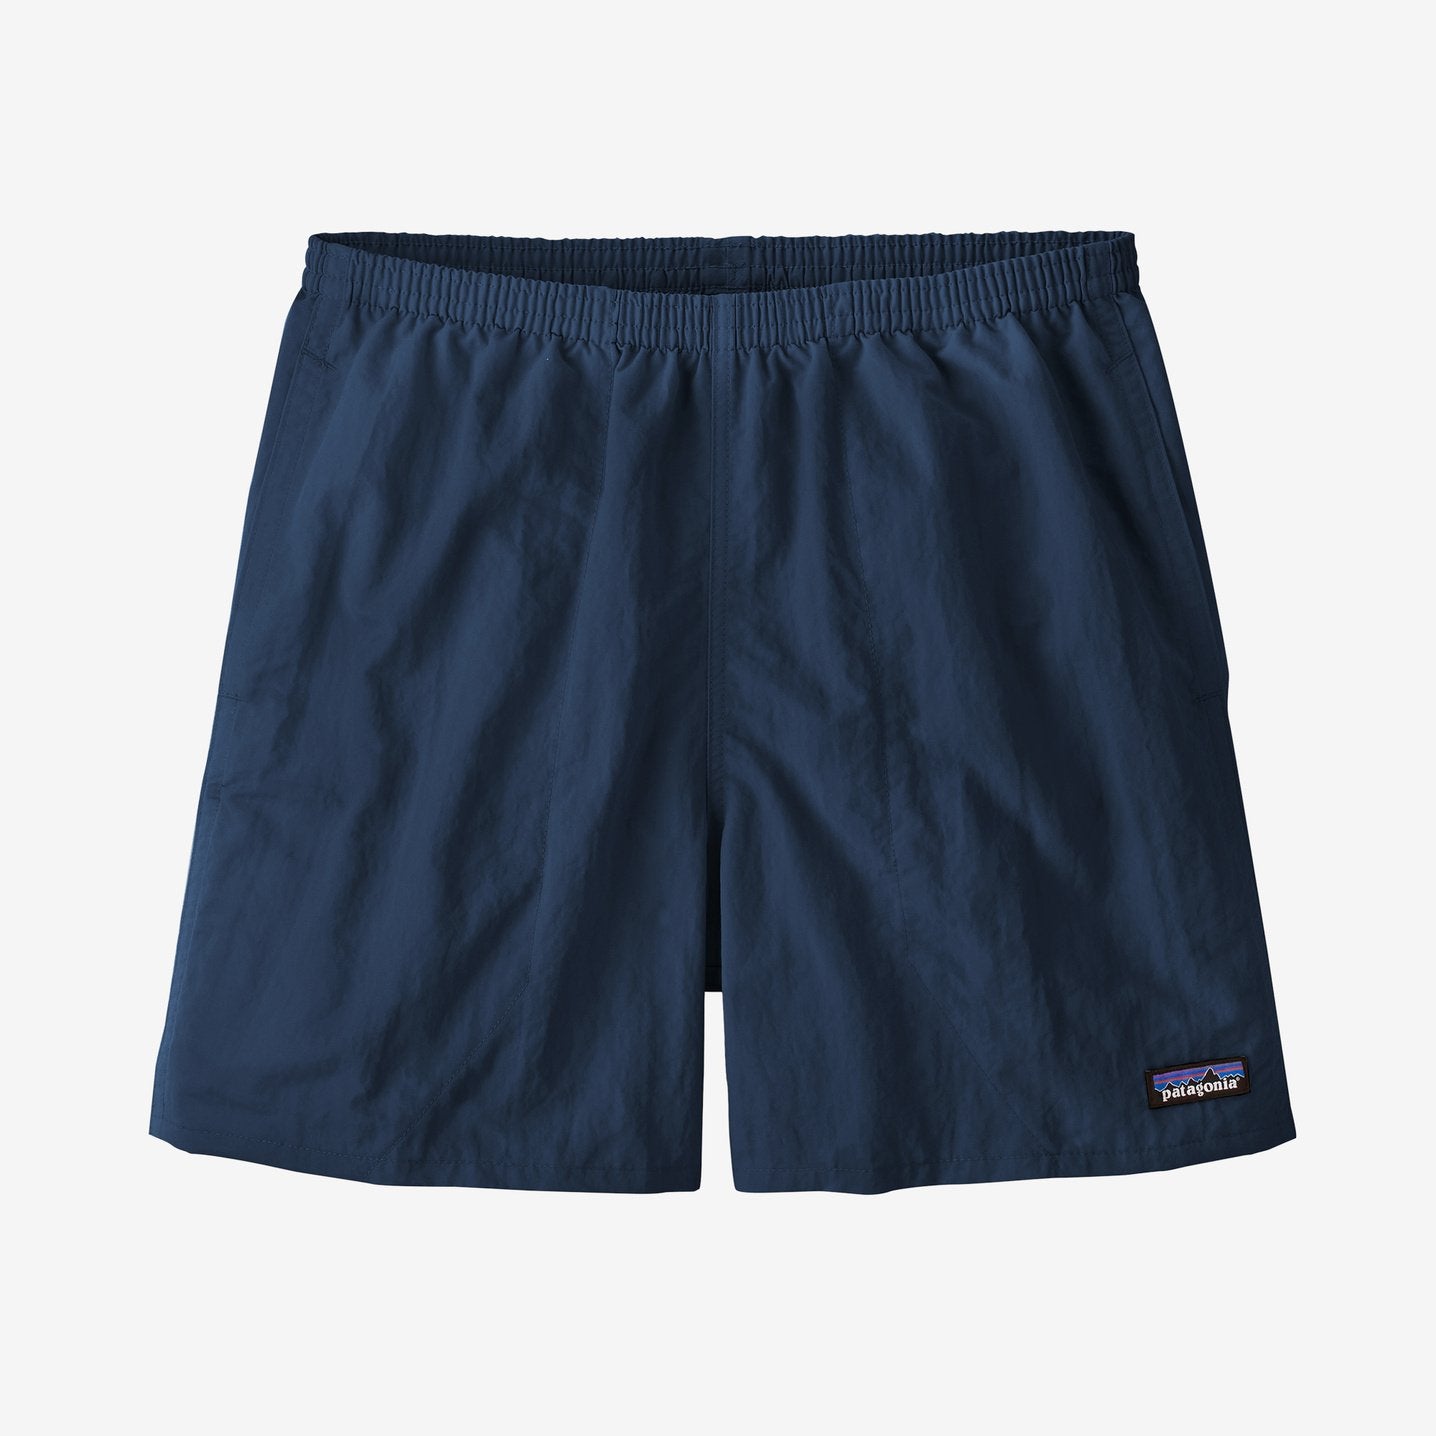 M Baggies Shorts - 5" - Tidepool Blue